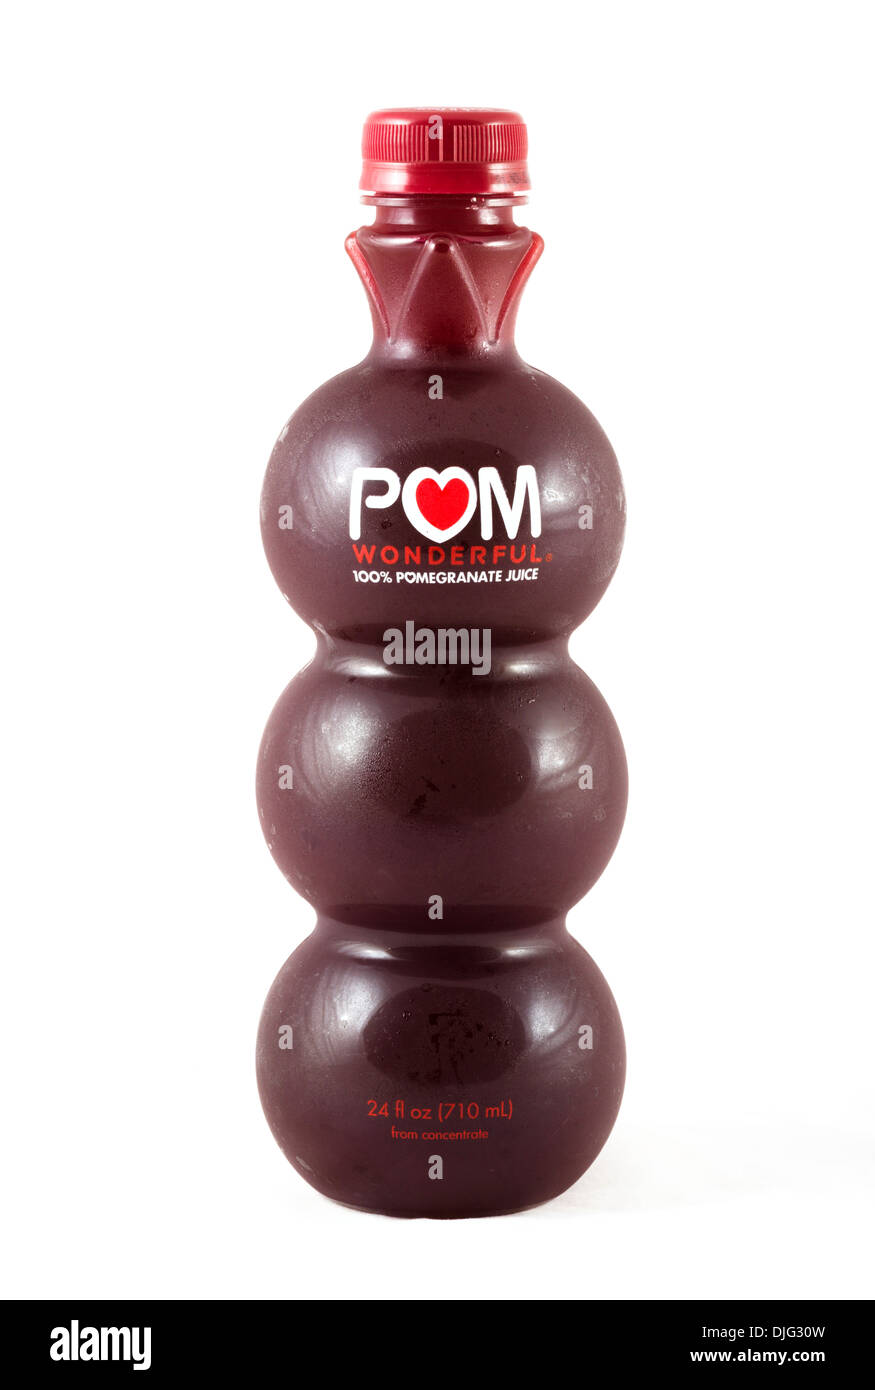 Bottle of chilled Pom Wonderful pomegranate juice, USA Stock Photo